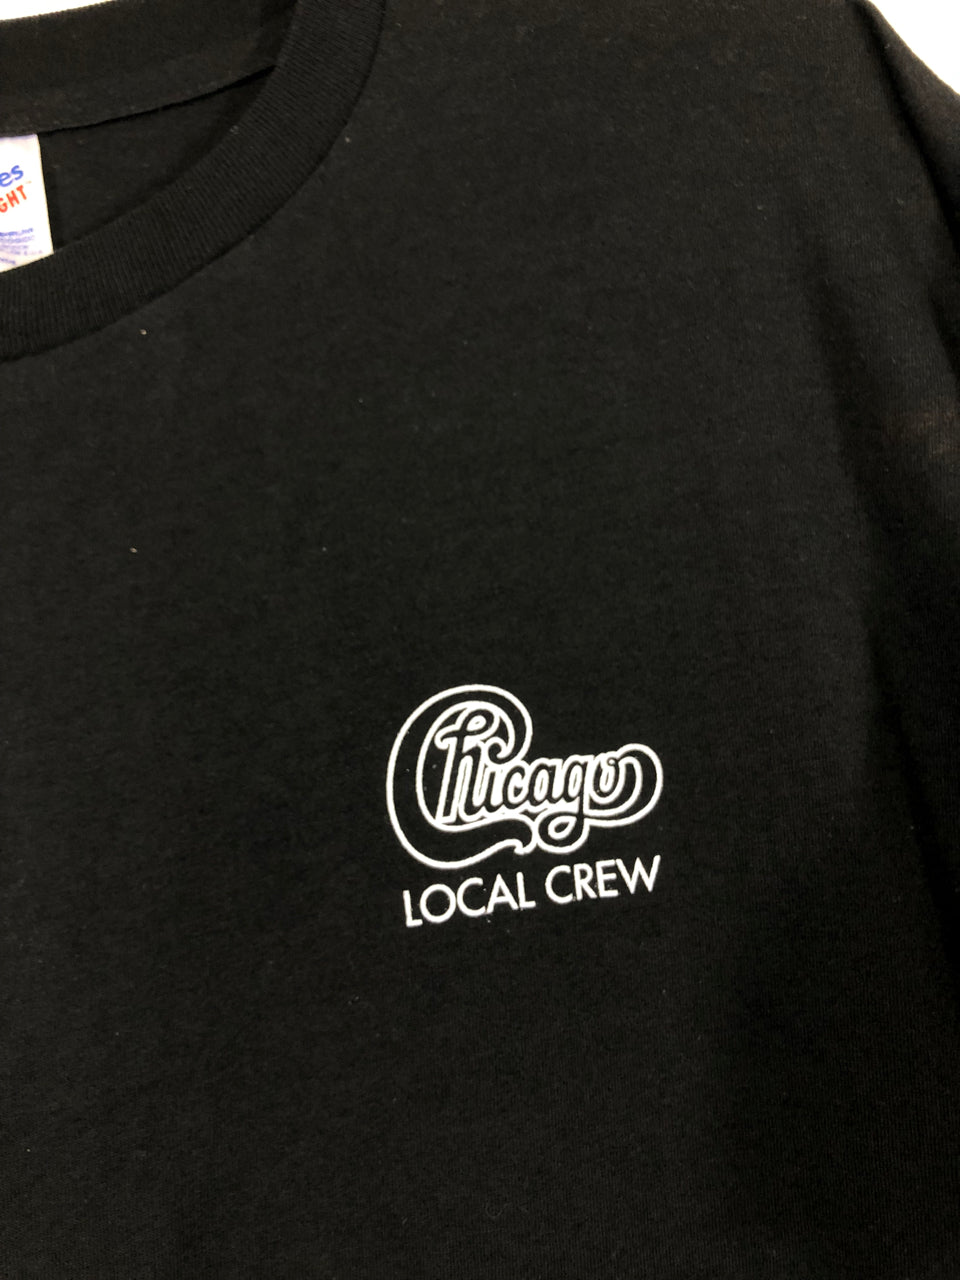 Chicago Local Crew Tour T-Shirt